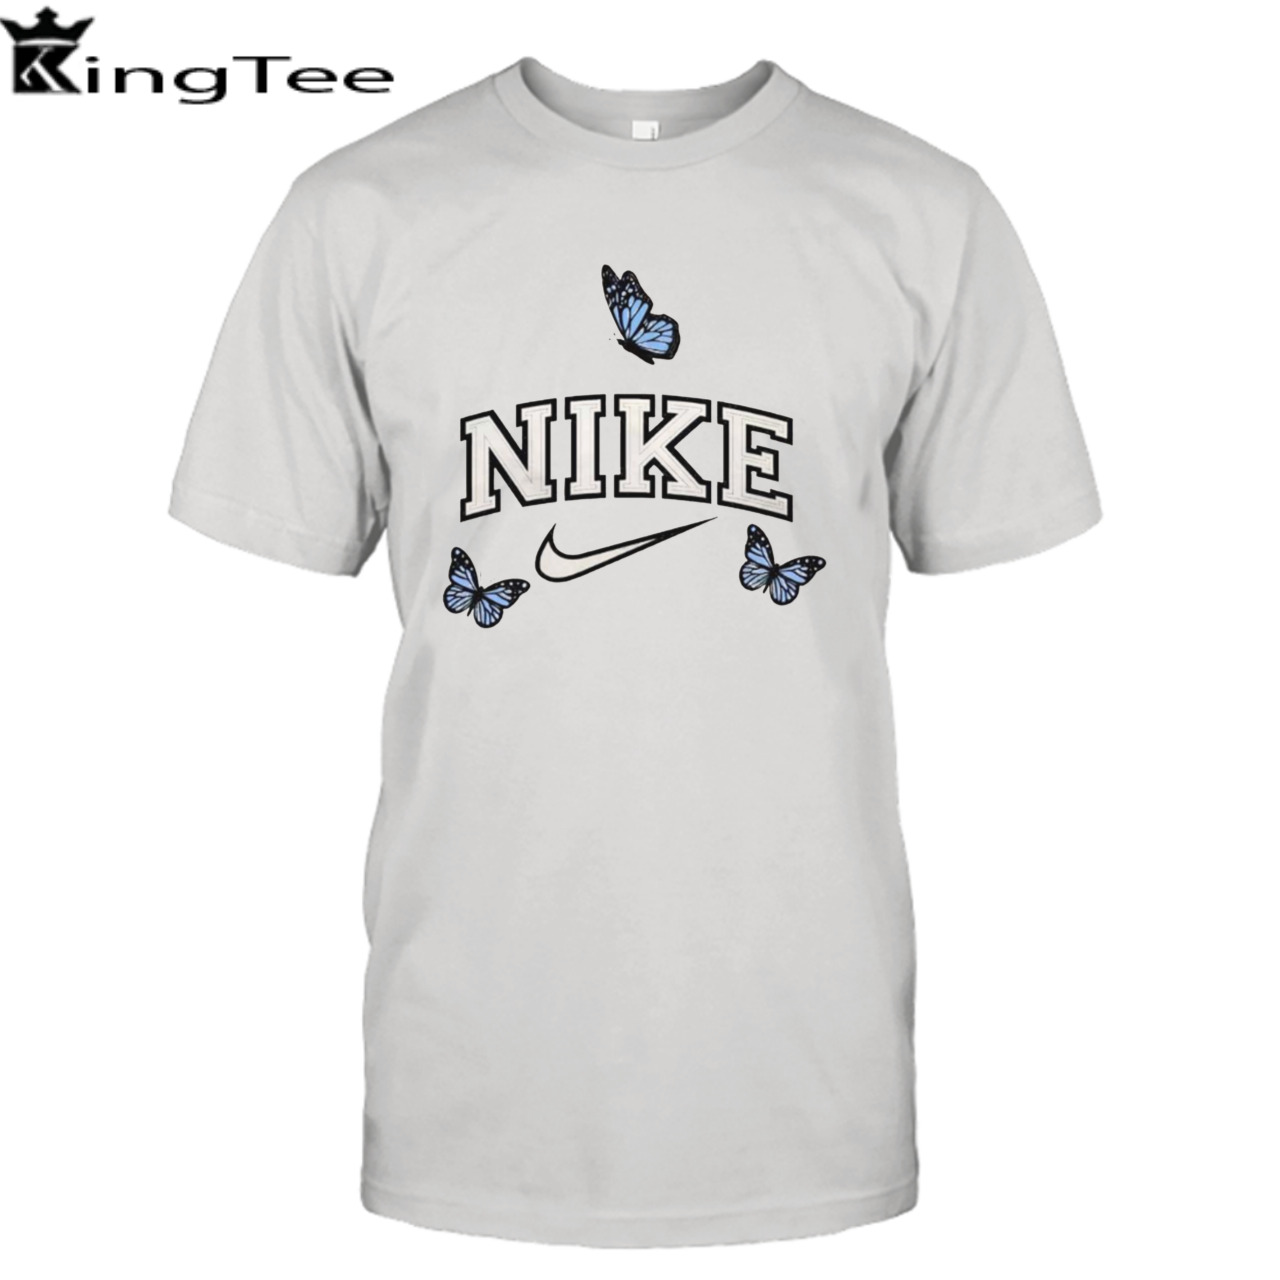 Nike Logo X Blue Butterflies shirt